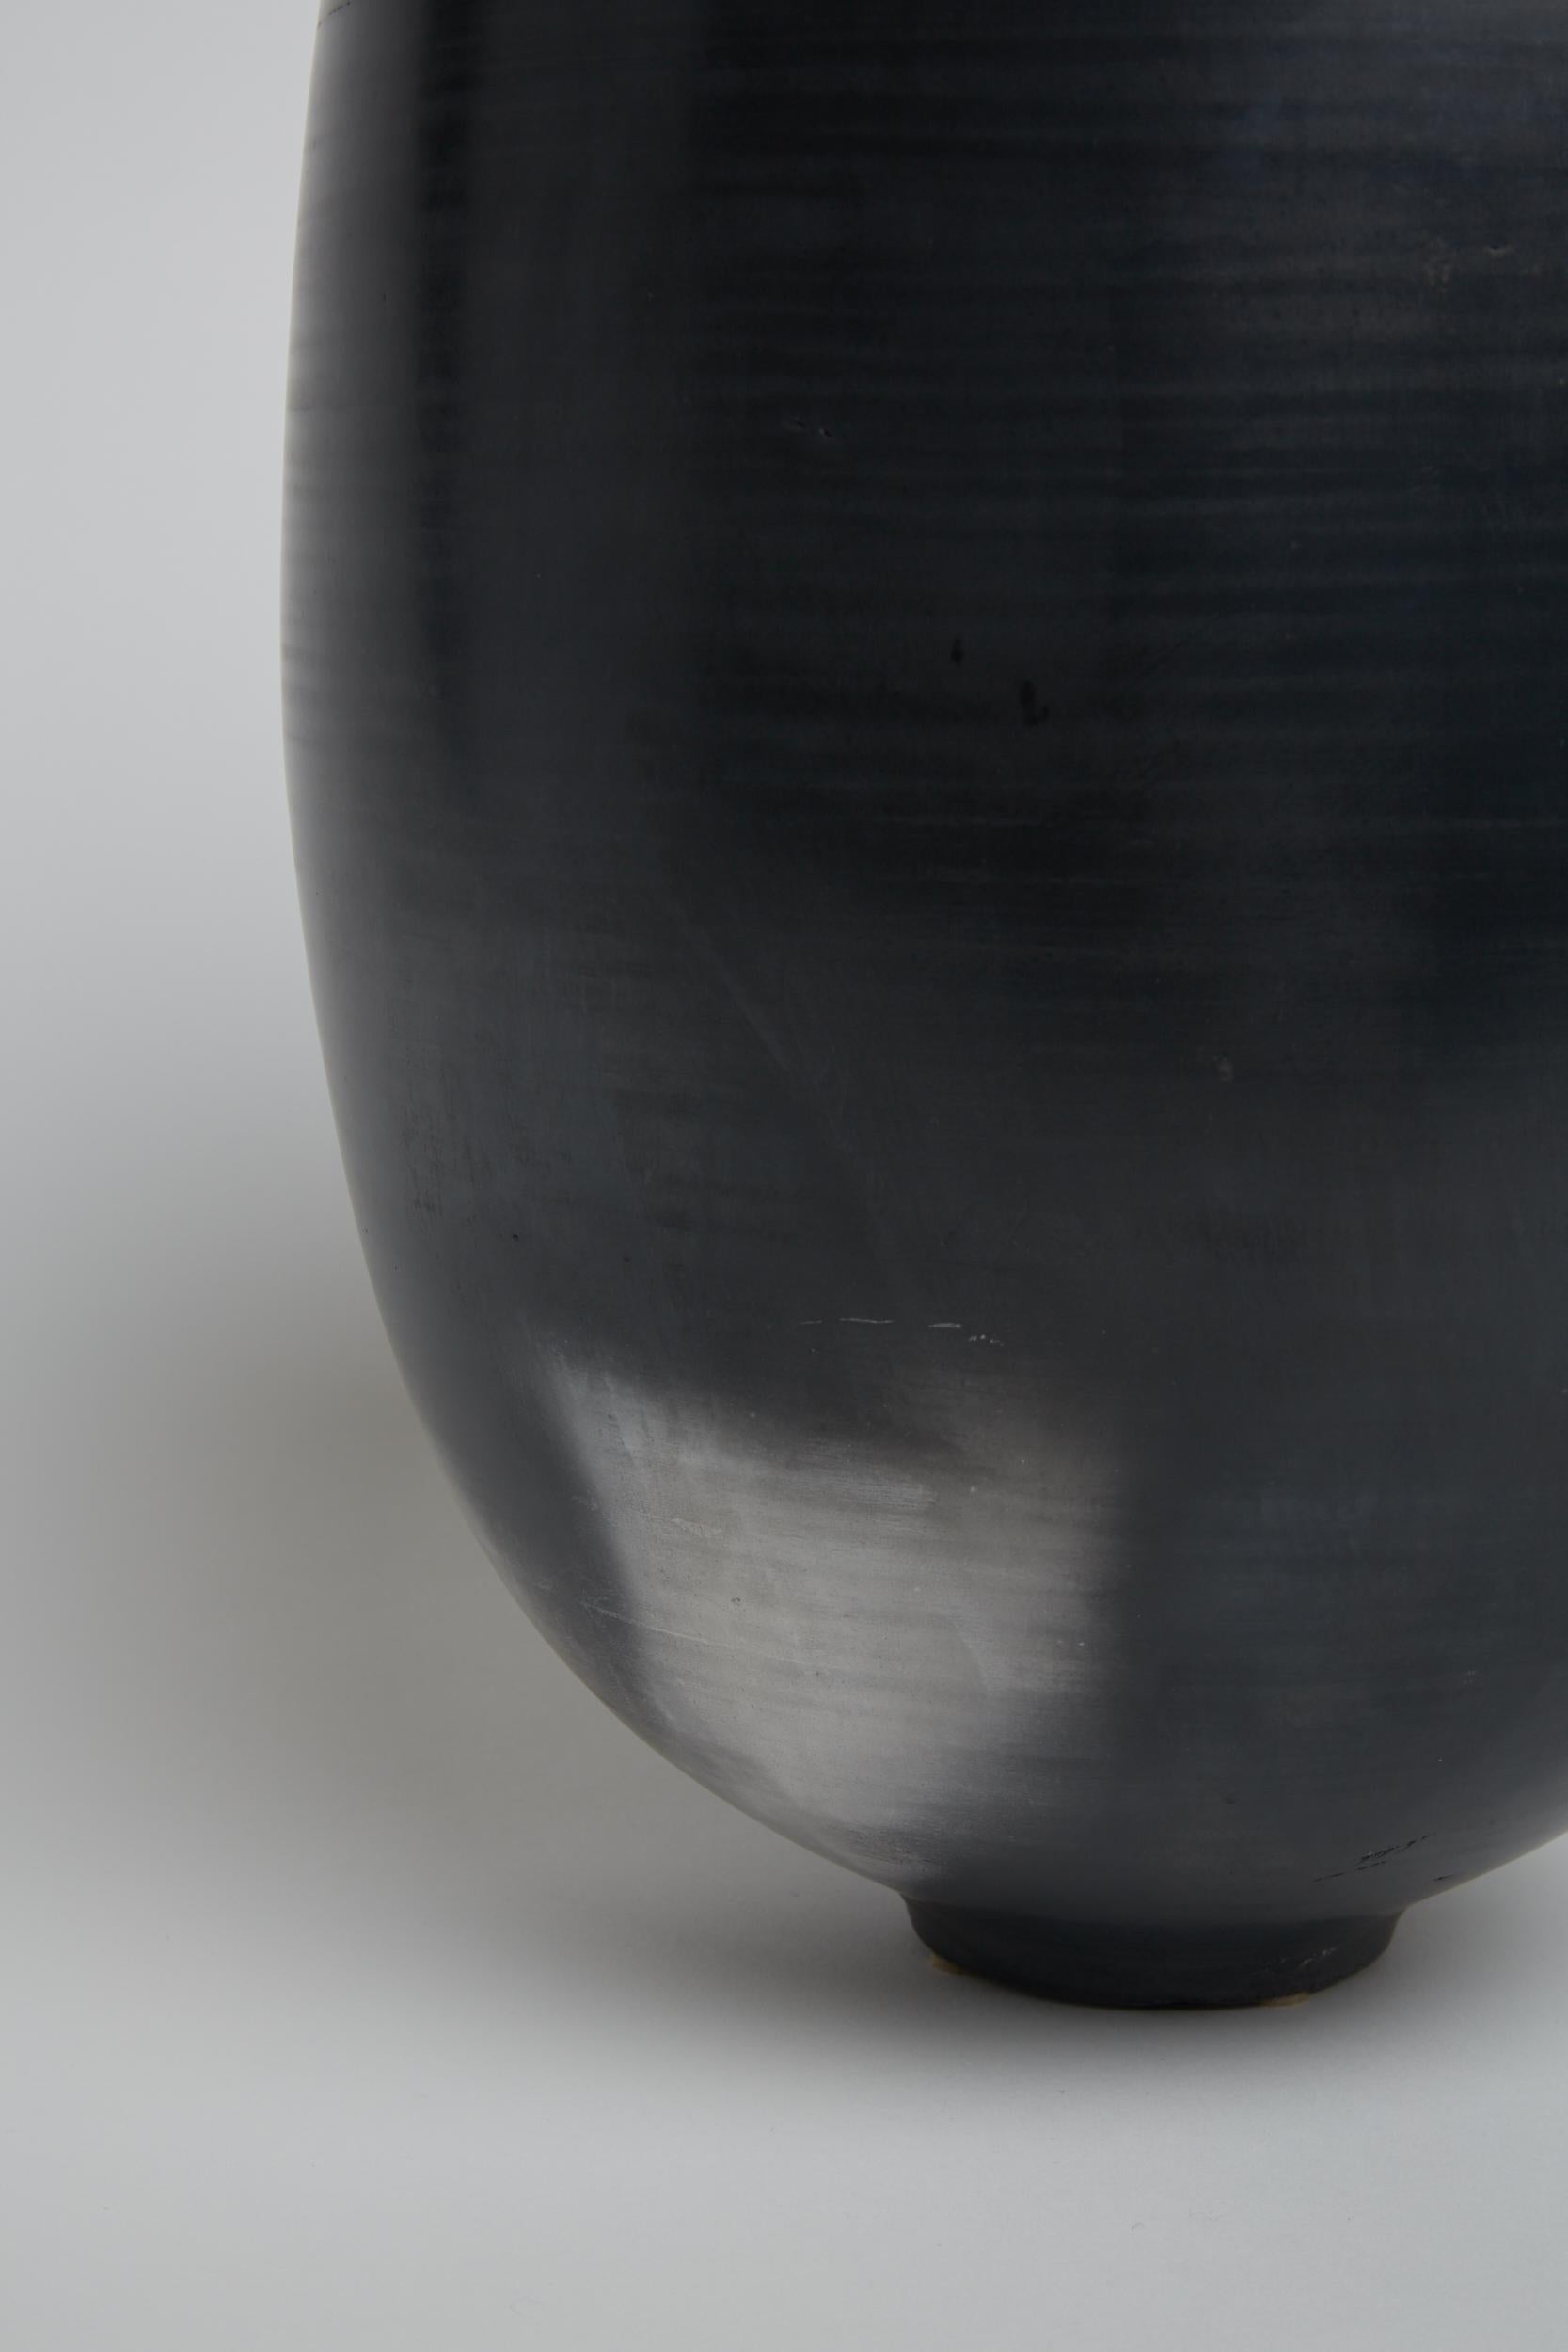 Unique Kintsugi Vase by Karen Swami 1